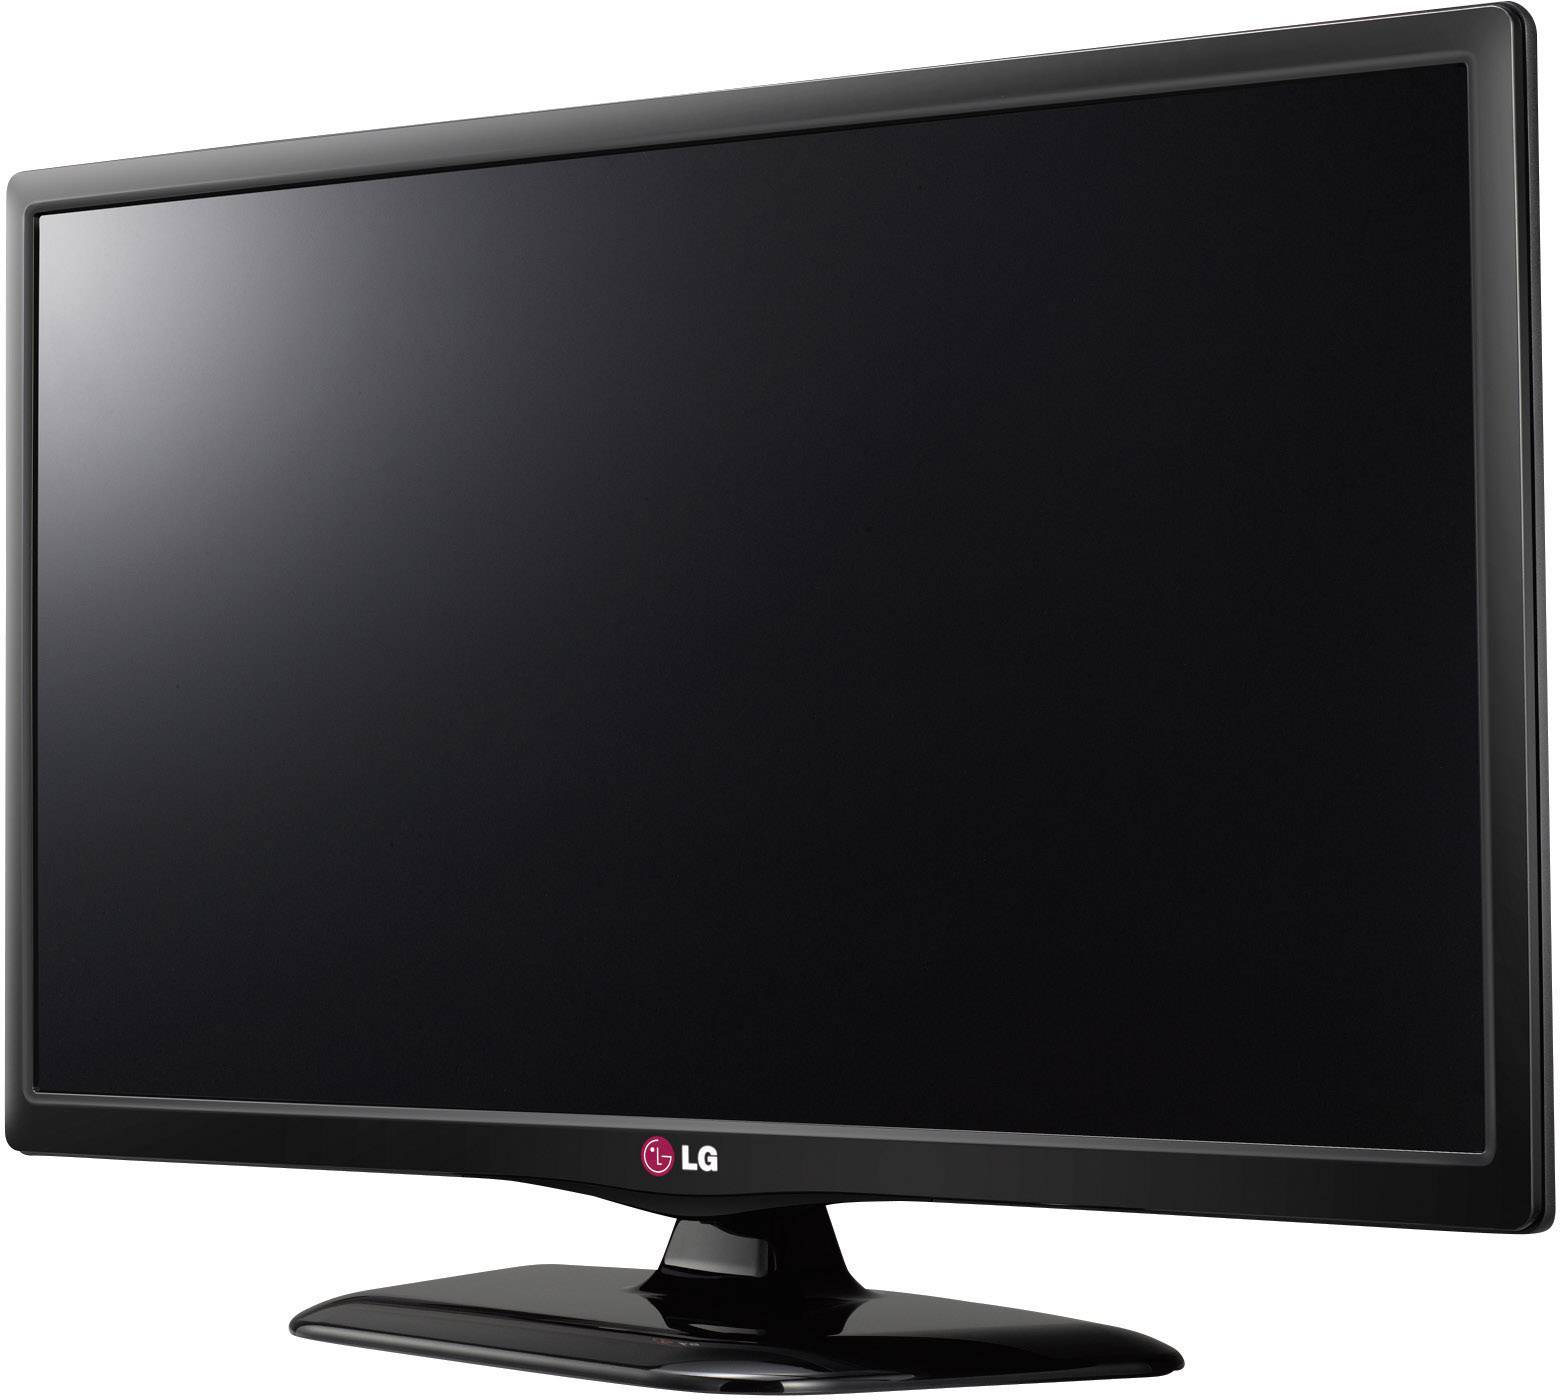 Tv 28 купить. LG 28lb450u. Телевизор LG 28lb450u. Телевизор LG 28lb450u 28". Телевизор led 22 LG 22lf450u.